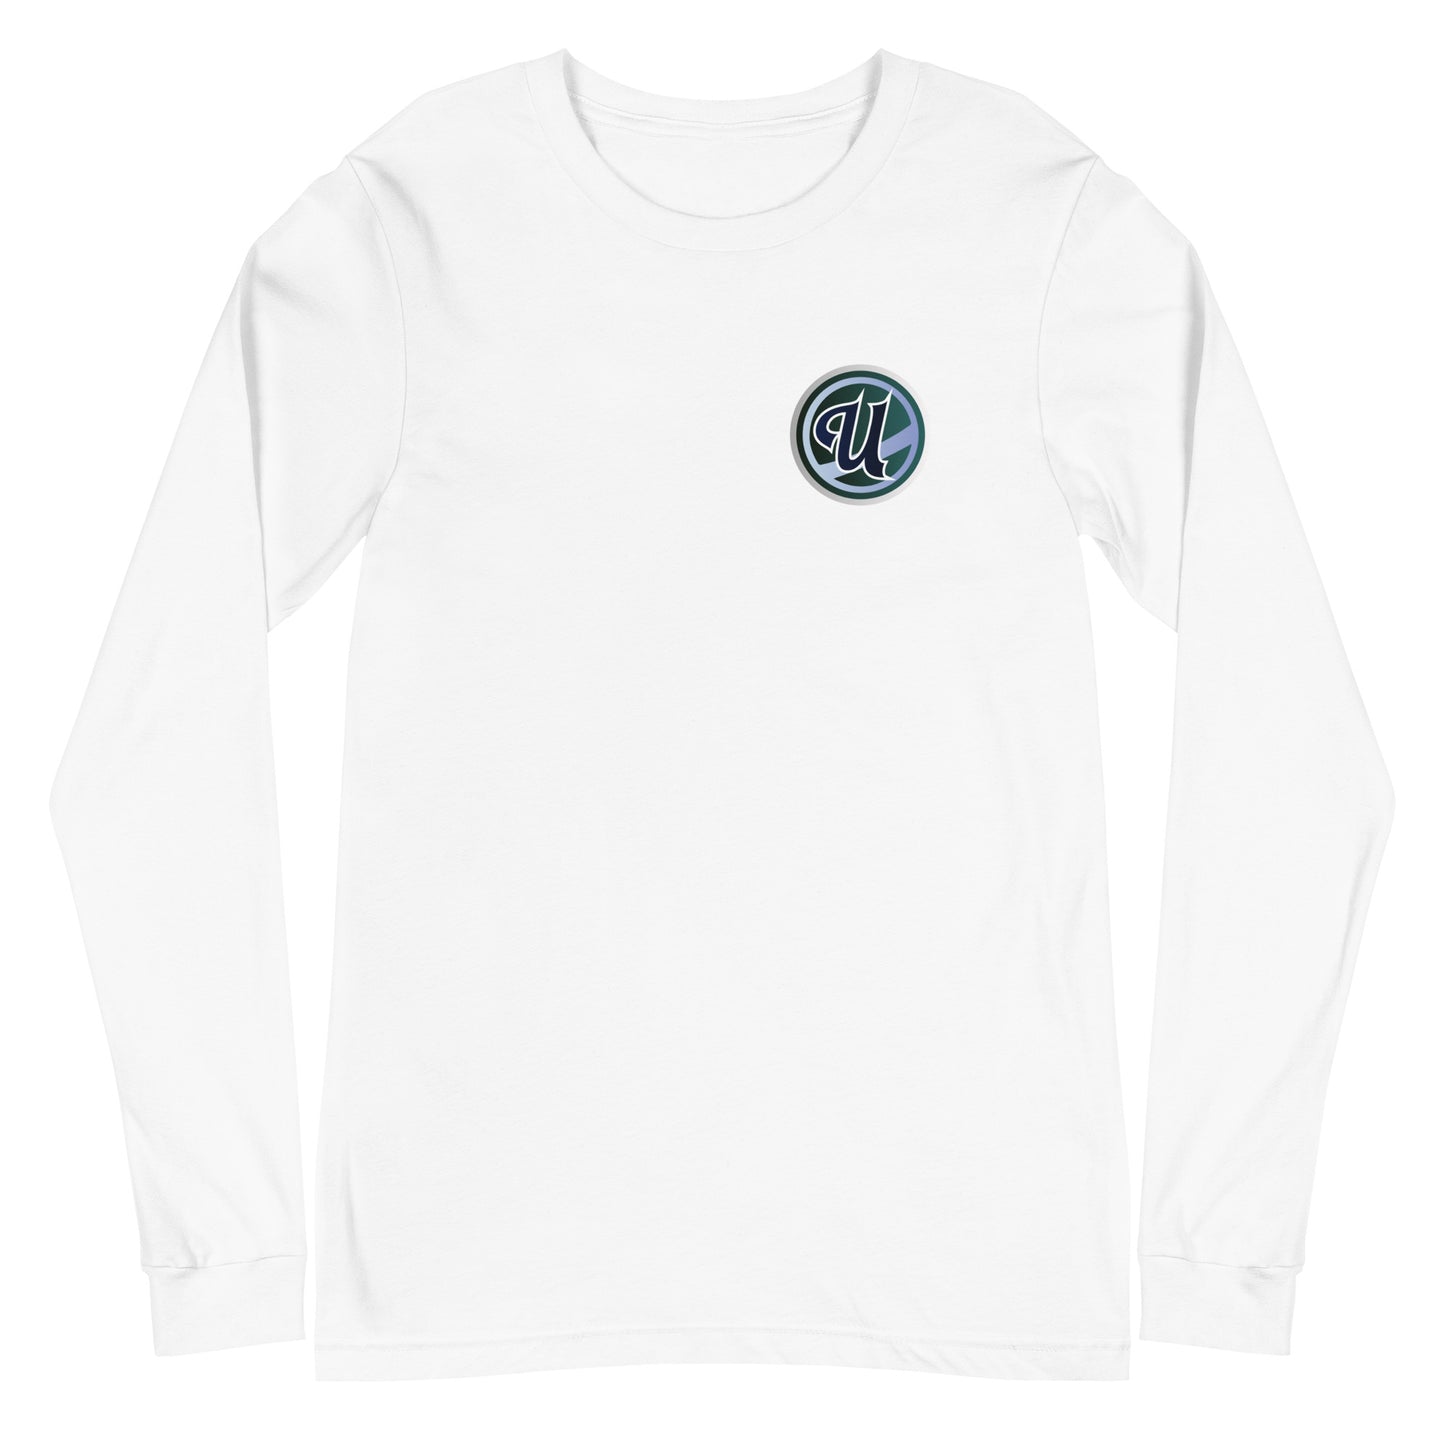 UAHL Winter Series - Forest Long Sleeve Shirt